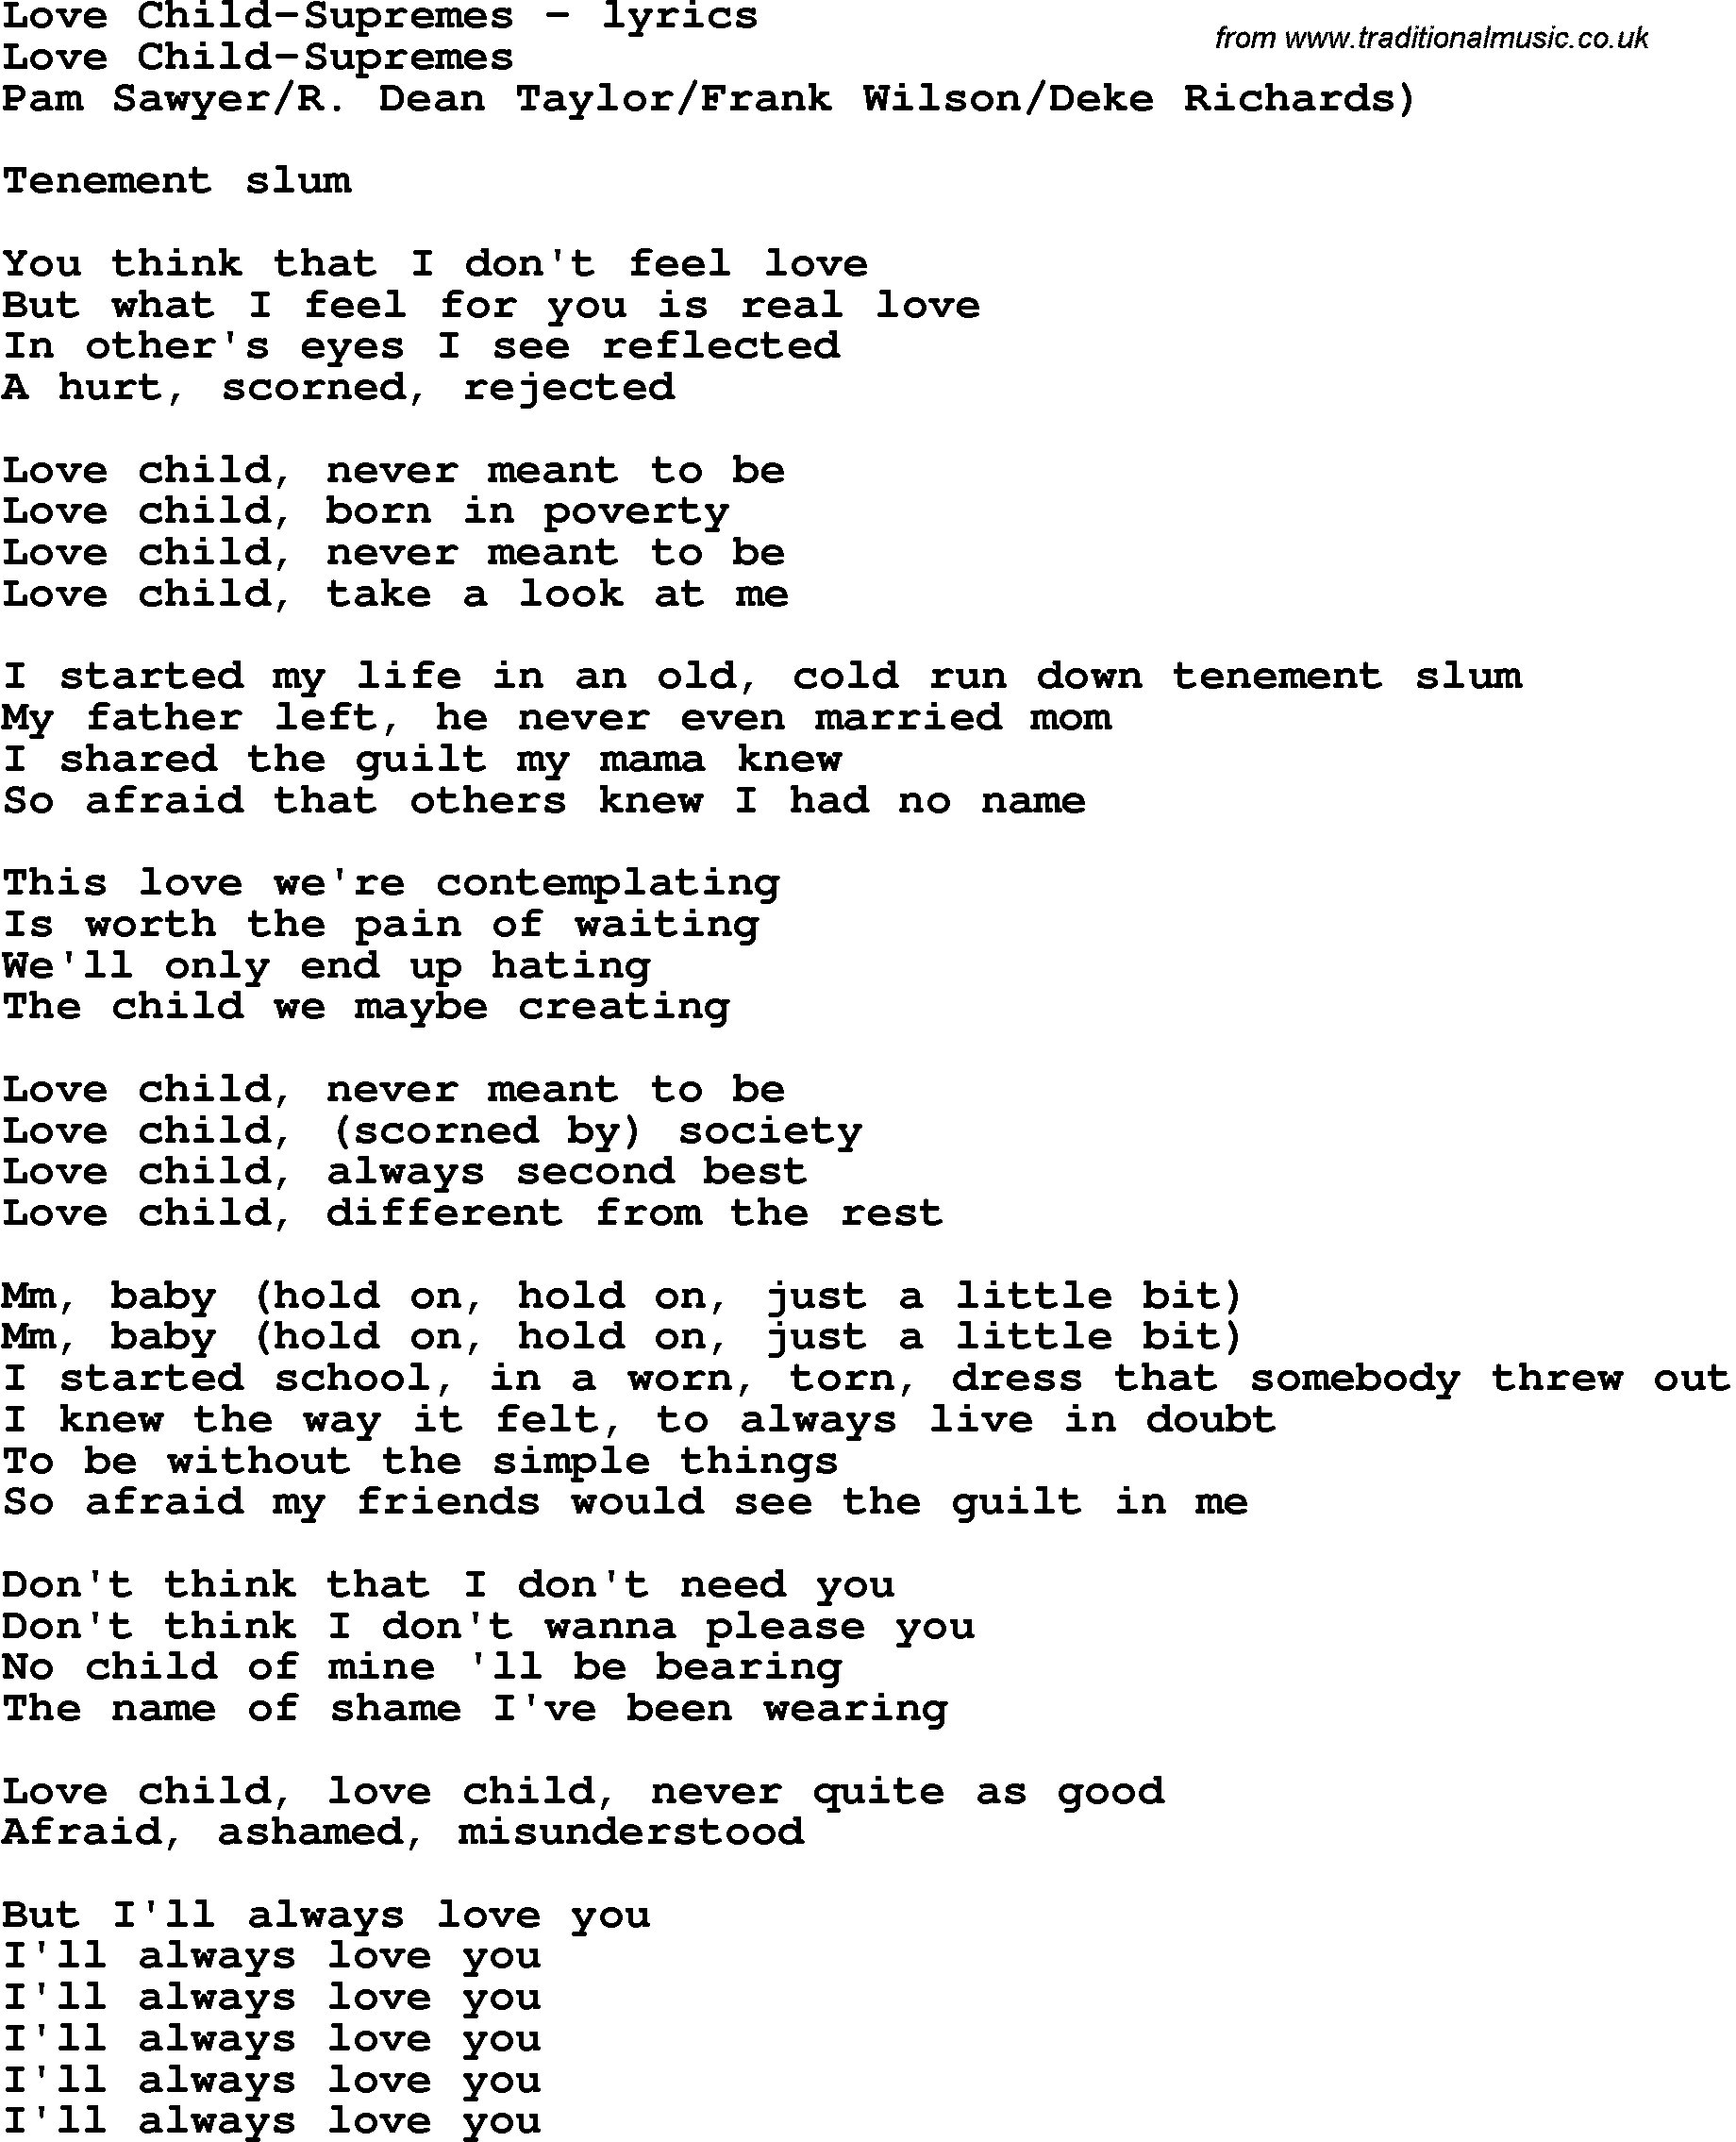 Love Song Lyrics for: Love Child-Supremes